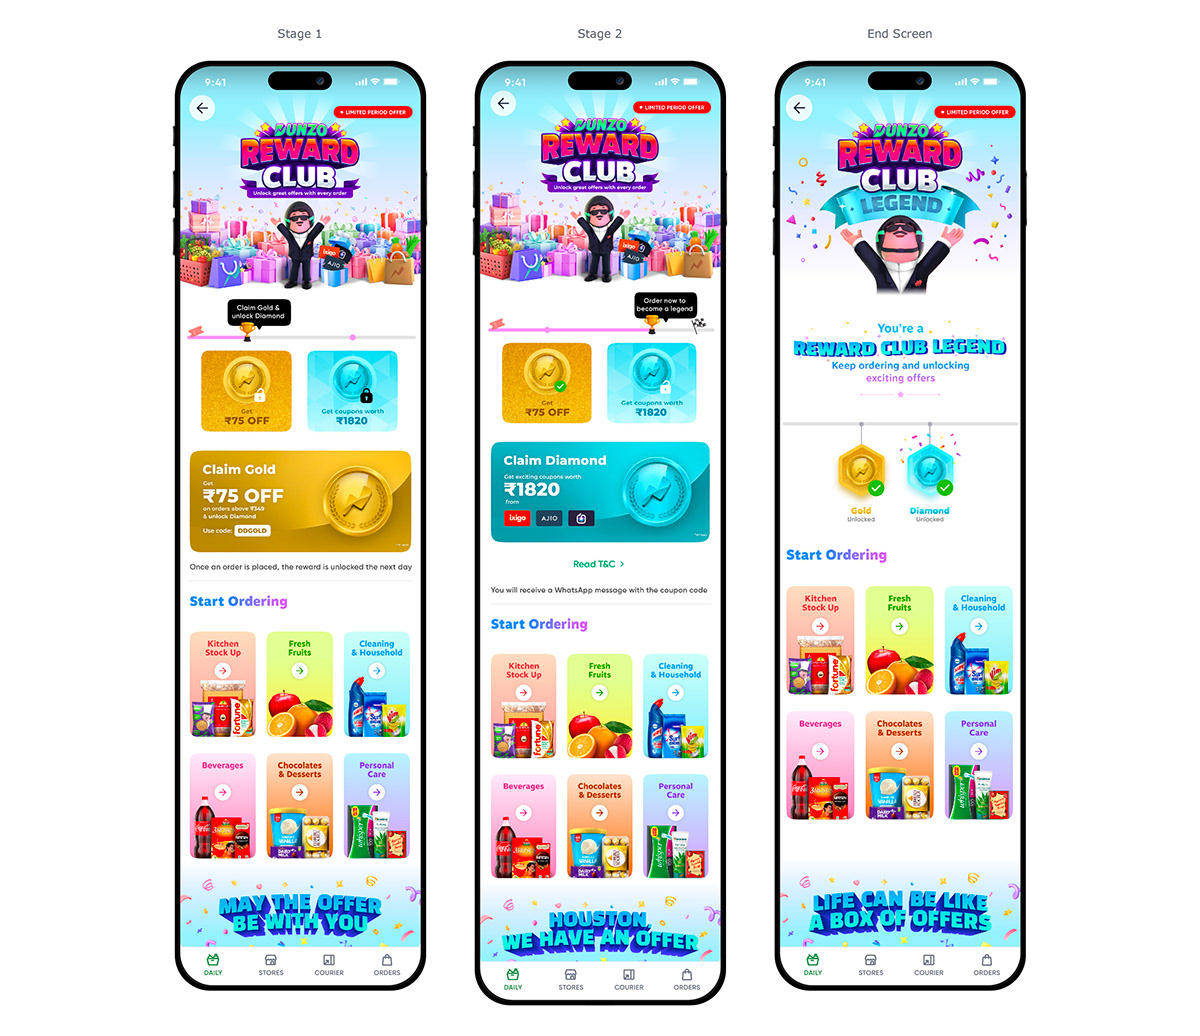 uiux dunzo Mascot gamification Mobile app ui design user interface app design rewardclub